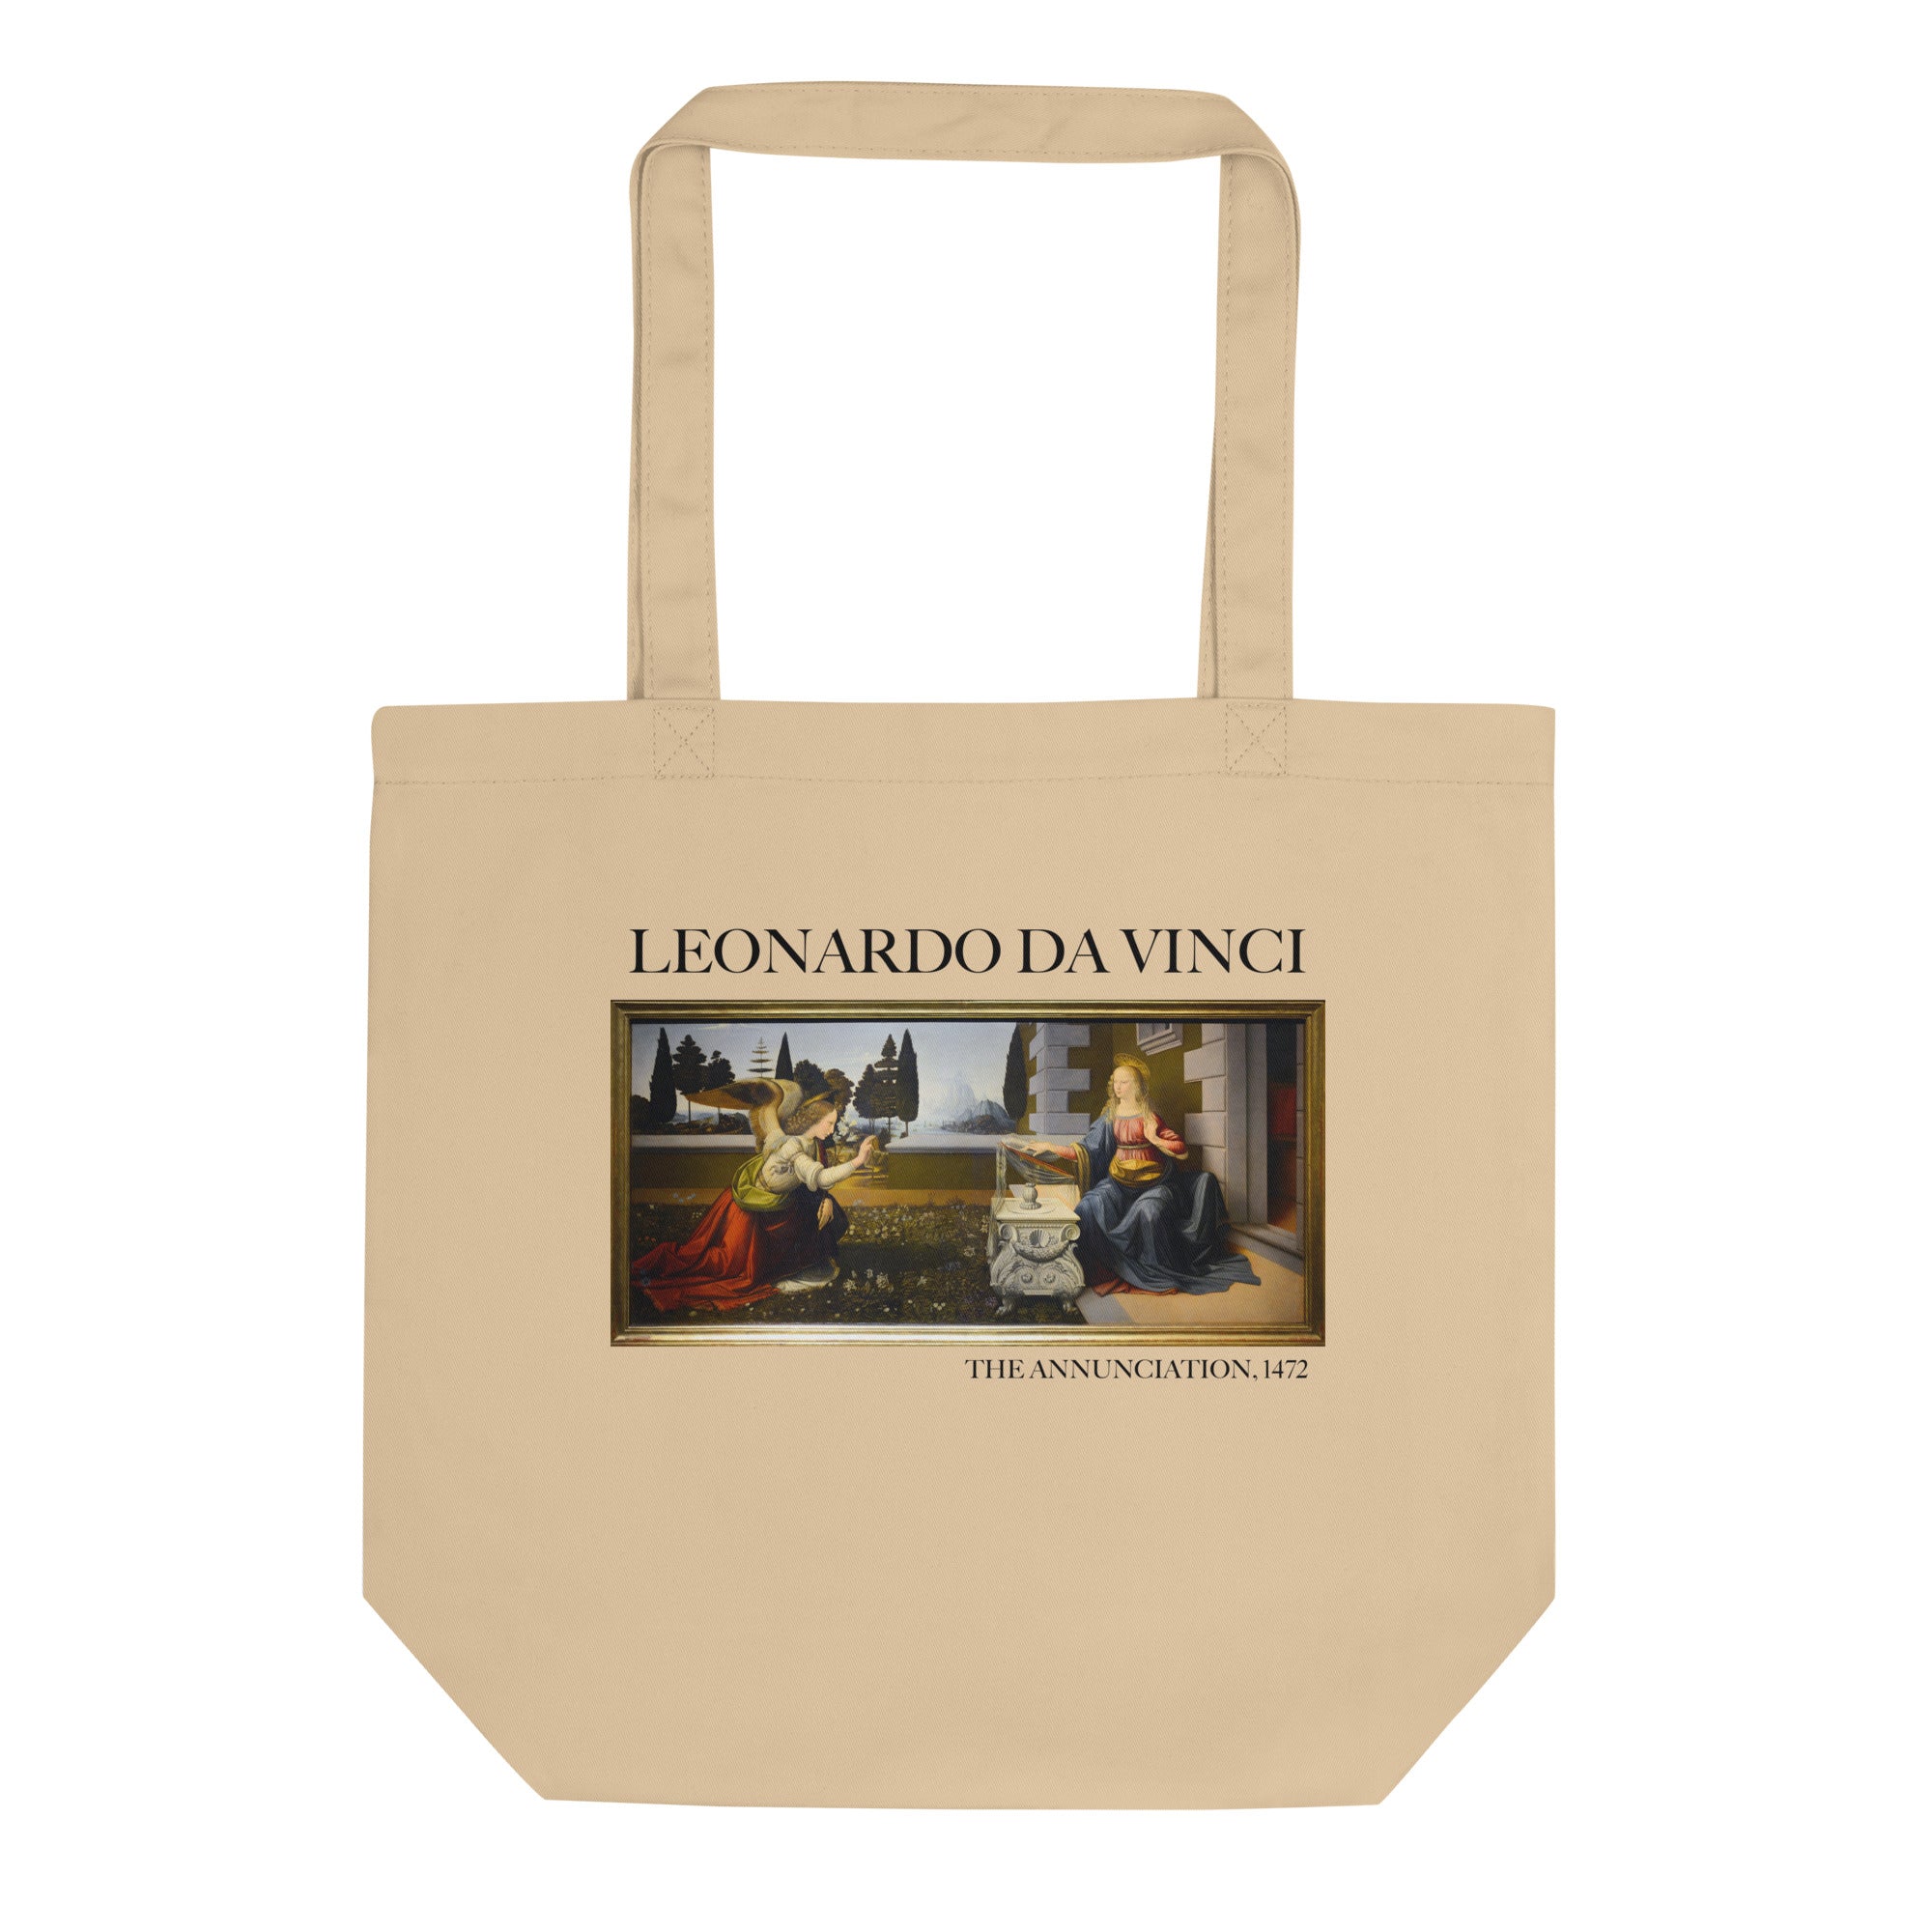 Leonardo da Vinci 'The Annunciation' Famous Painting Totebag | Eco Friendly Art Tote Bag